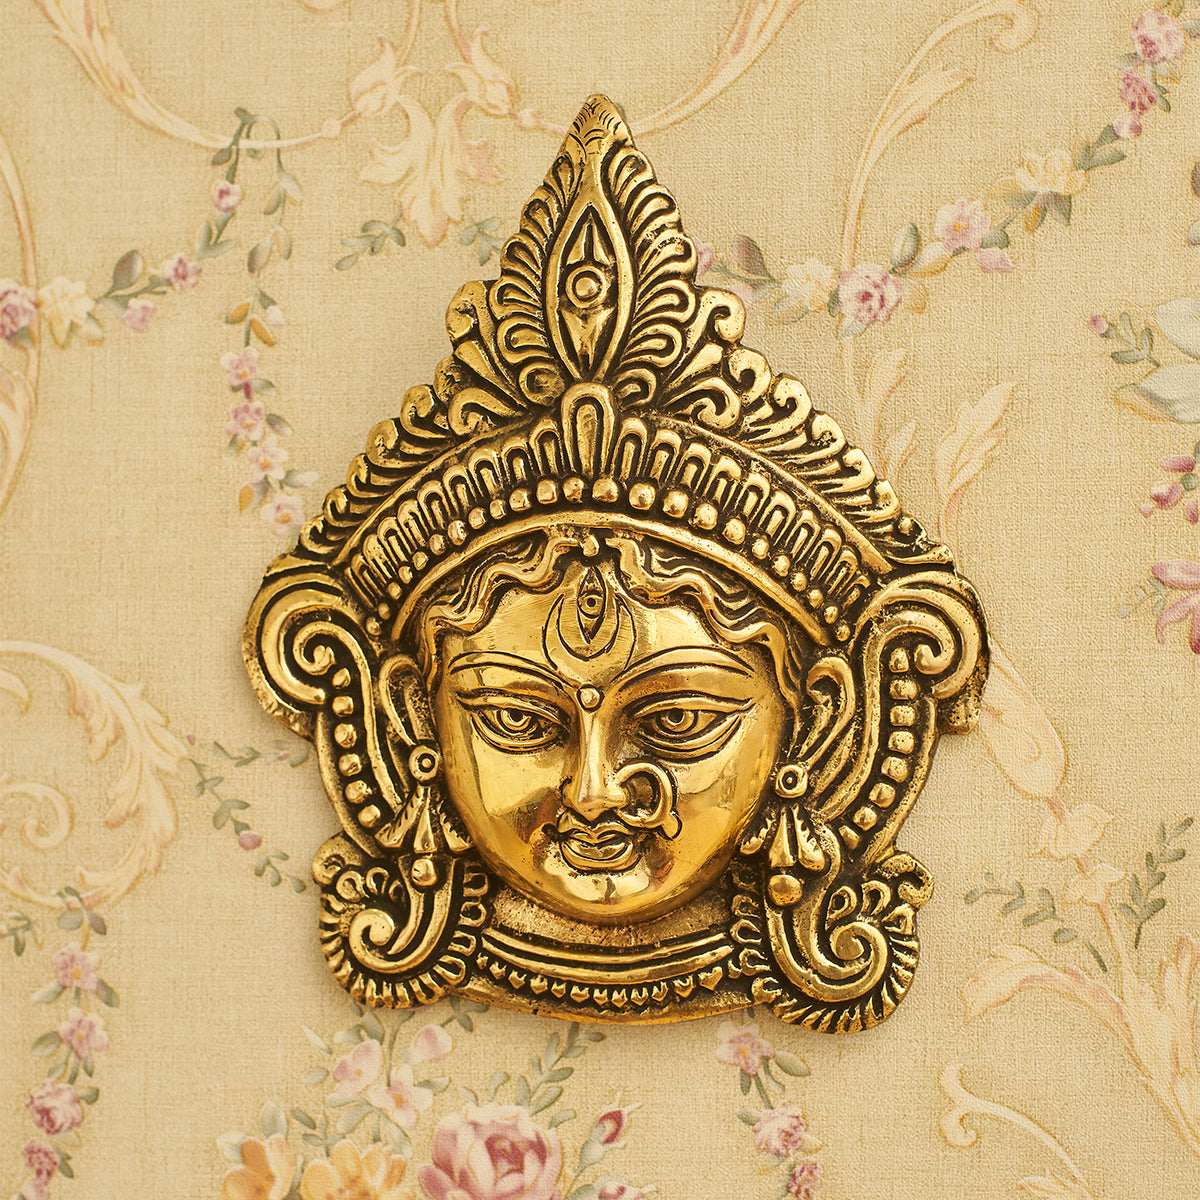 Auspicious Brass Durga Wall Decor - Indian Goddess